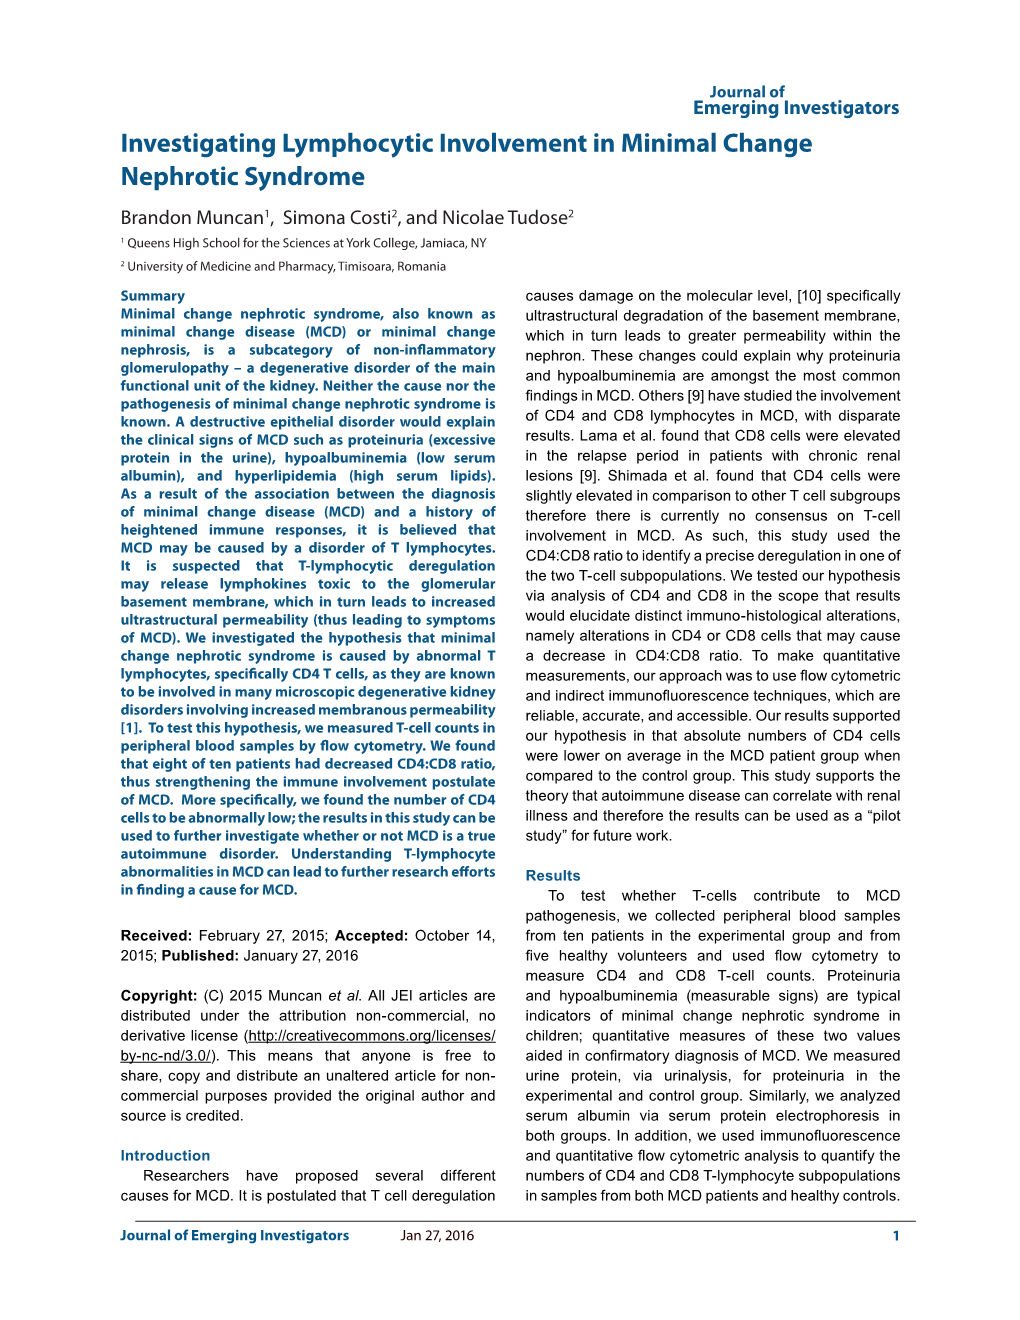 Investigating Lymphocytic Involvement in Minimal Change Nephrotic